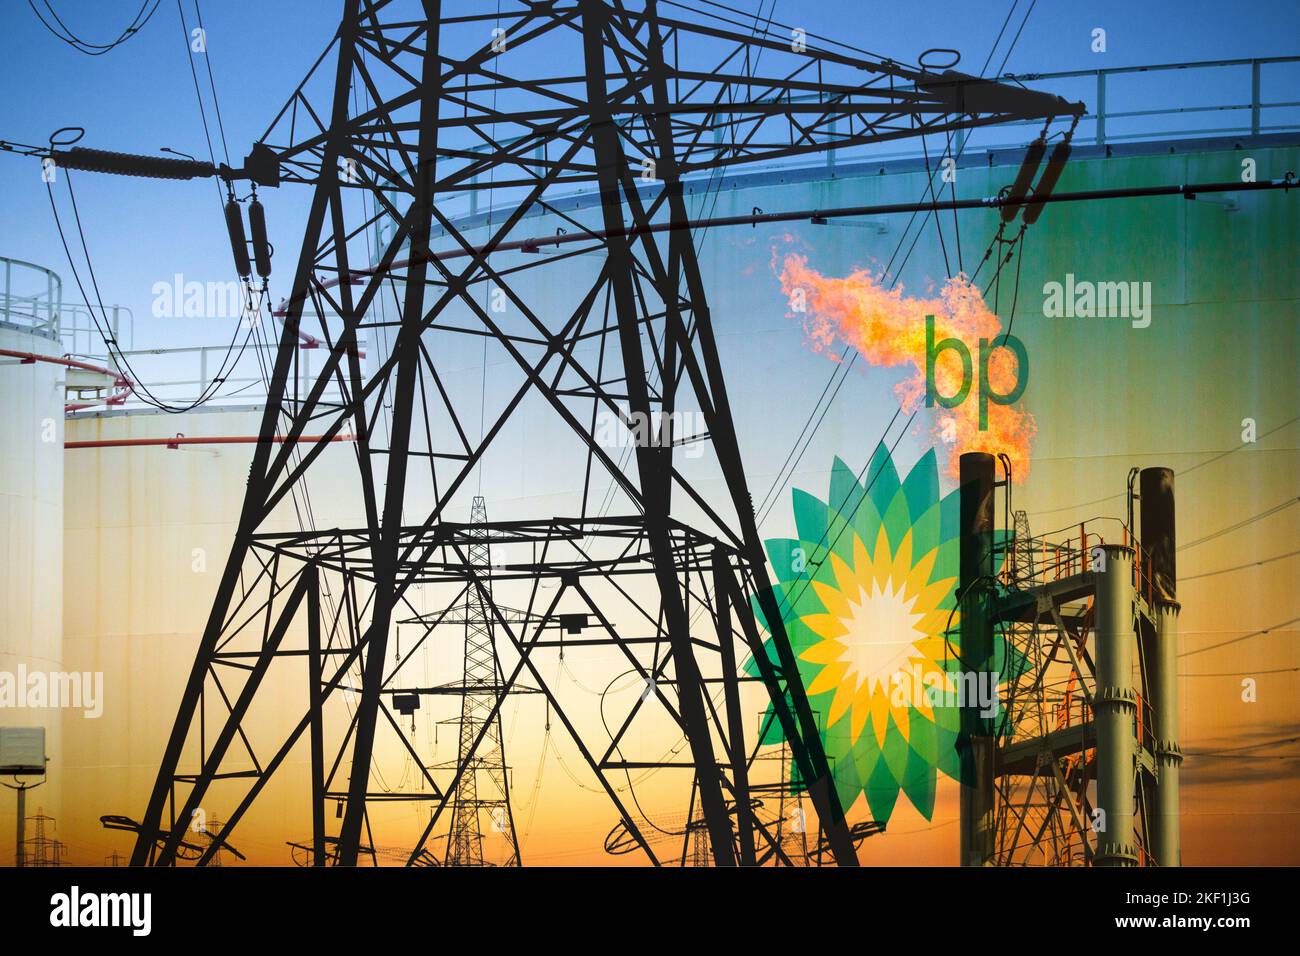 BP-Öl, Kraftstofflagertanks. Konzept, Windfallsteuer, Nordsee Gas/Öl, erneuerbare Energien, Klimawandel, Netto Null 2050, Ölindustrie profitiert... Stockfoto